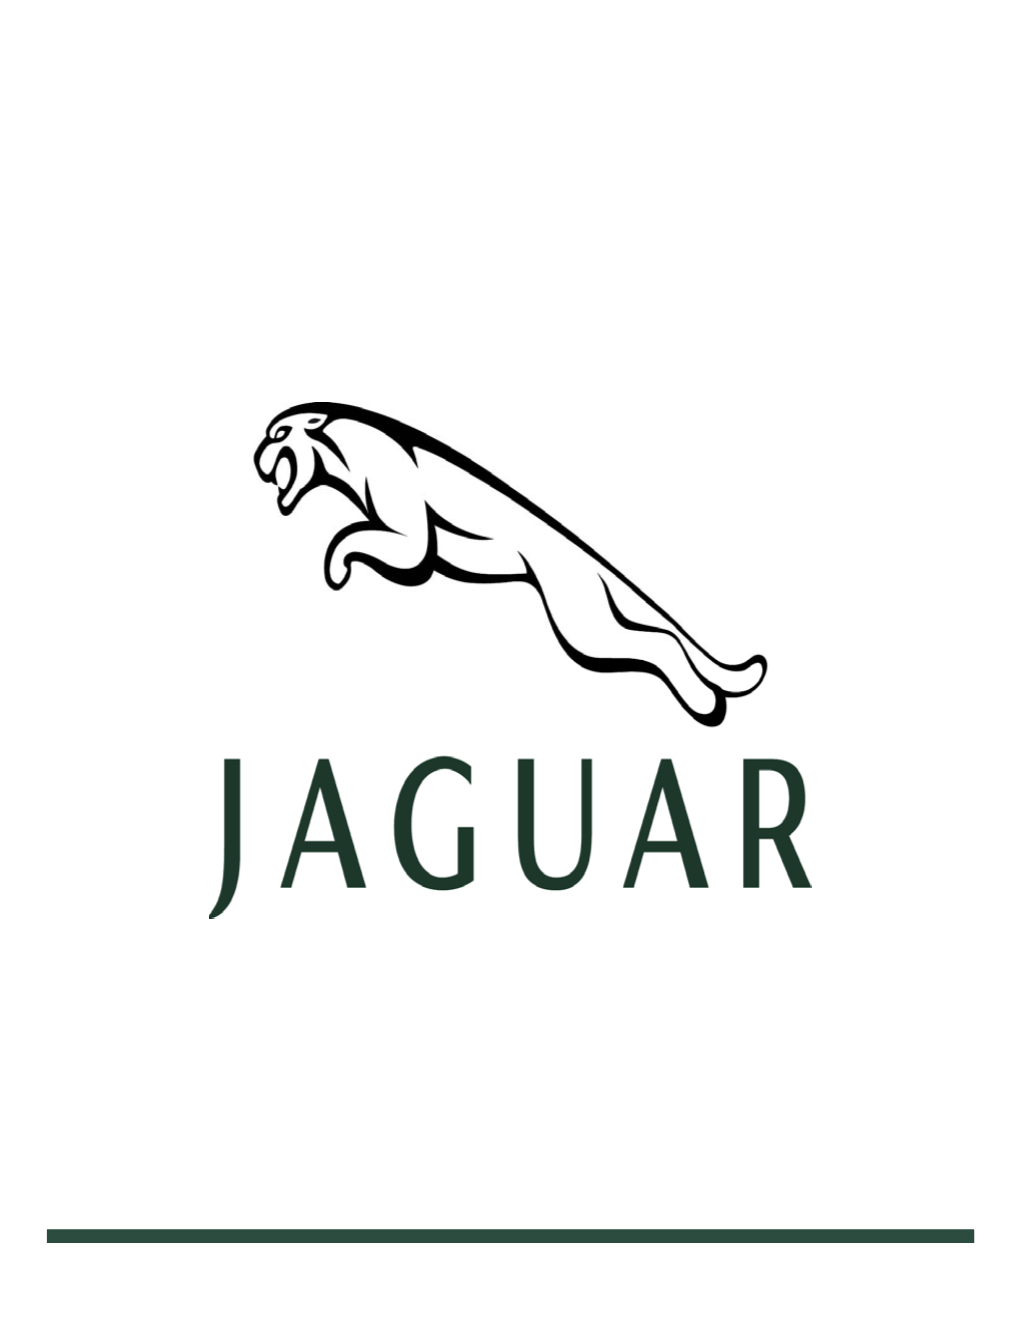 Design and Calibration of the New Jaguar XK Adaptive Cruise Control